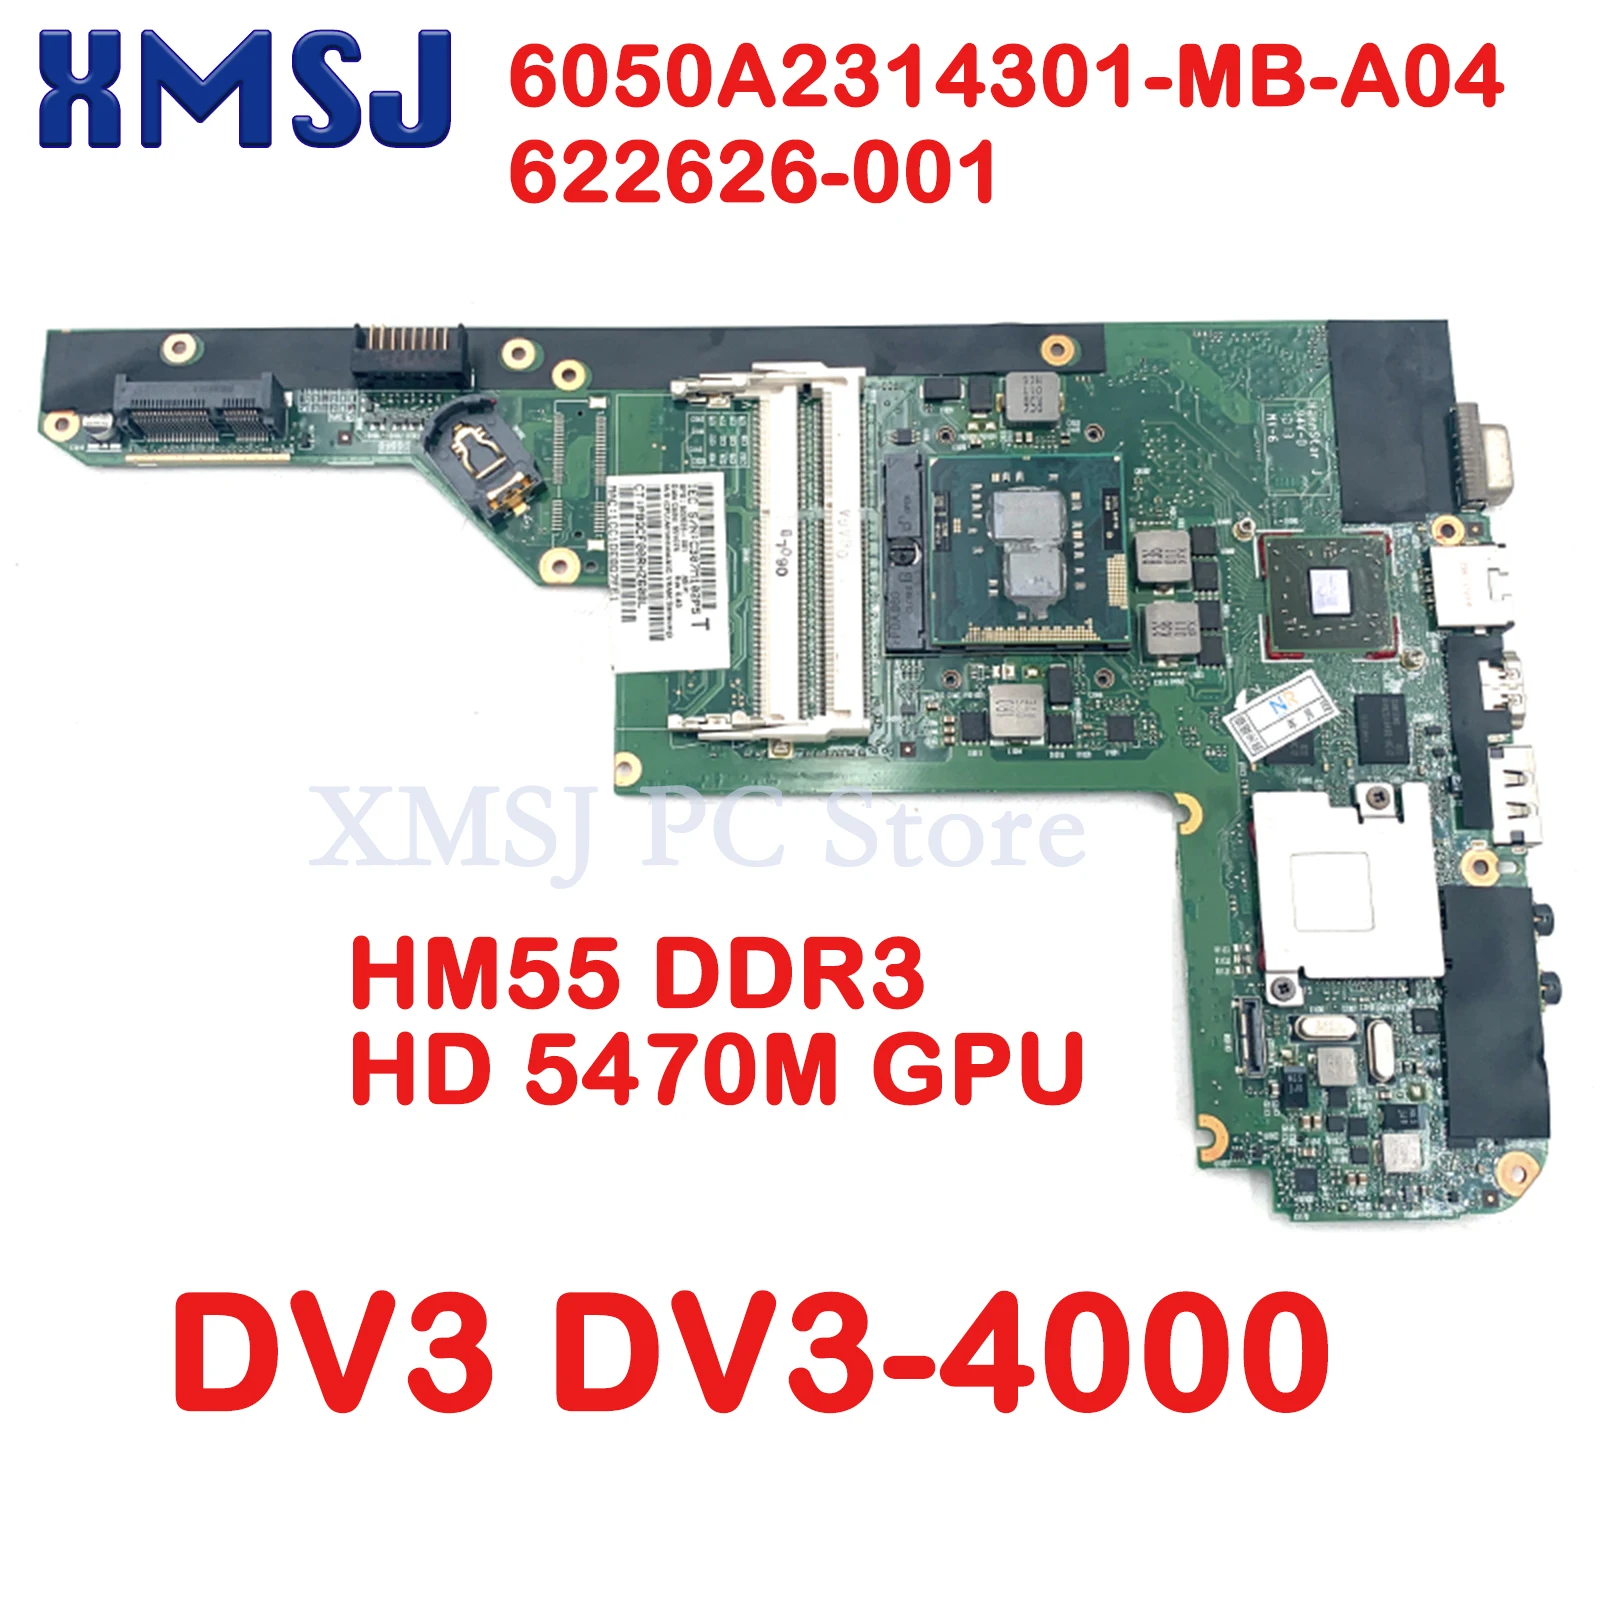 XMSJ 6050A2314301-MB-A04 622626-001 for HP DV3 DV3-4000 laptop motherboard HM55 DDR3 HD 5470M GPU free CPU main board